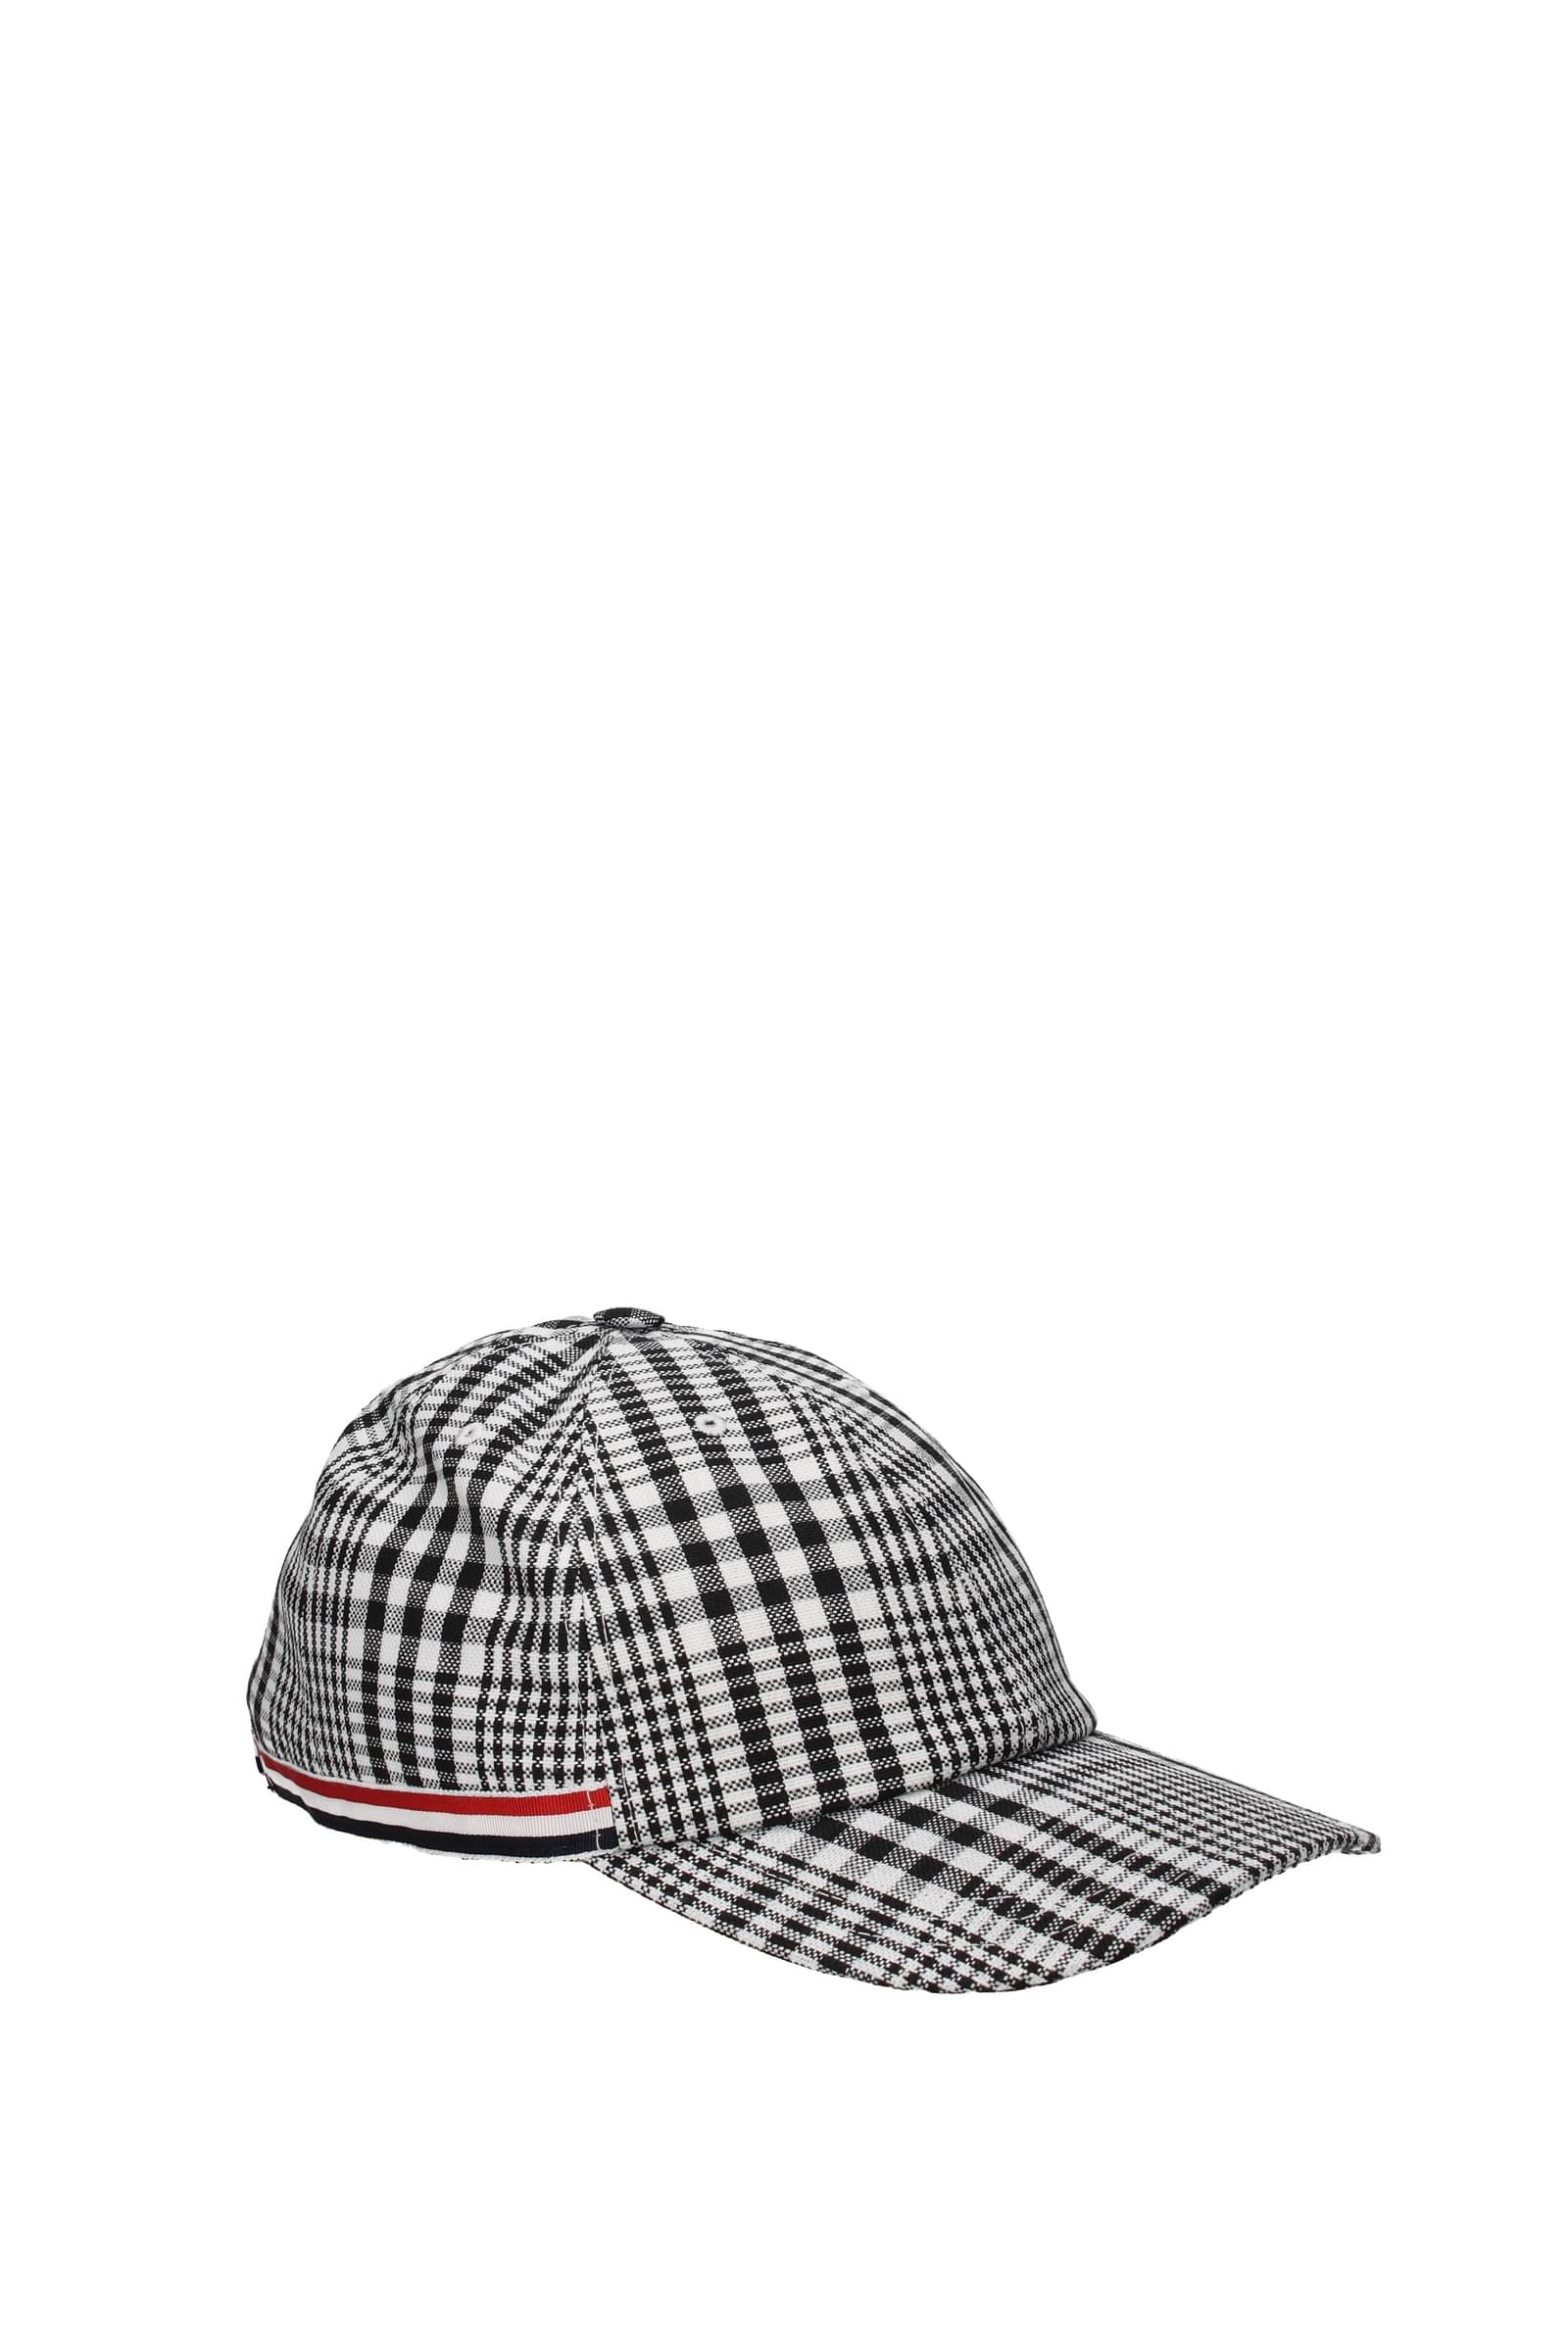 Thom Browne cotton hat